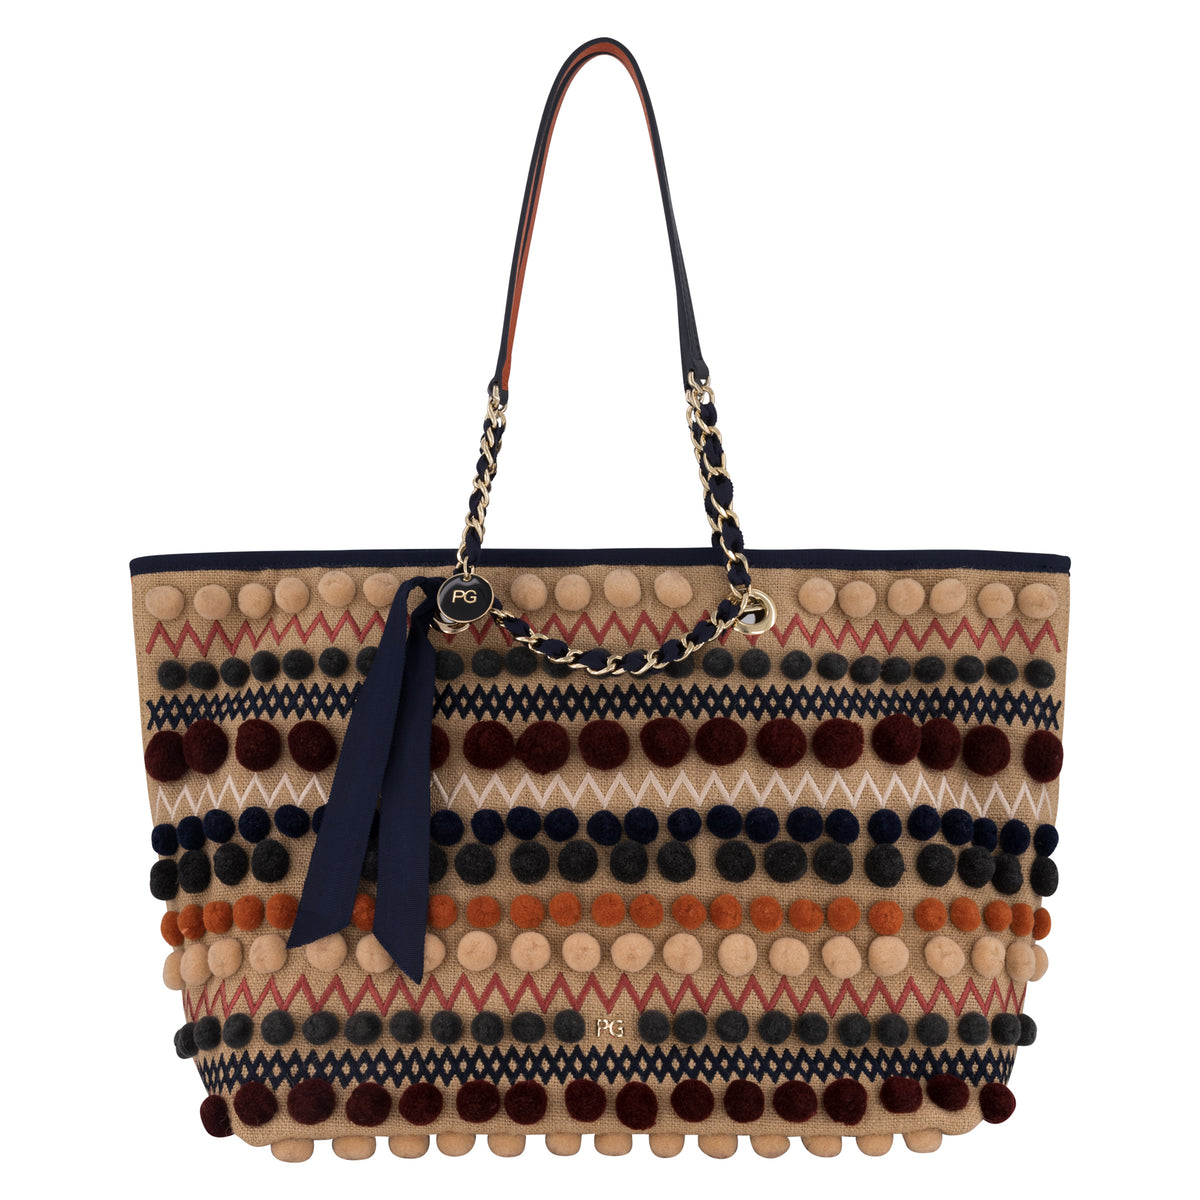 Christian Louboutin Studded Knit Tote Bag